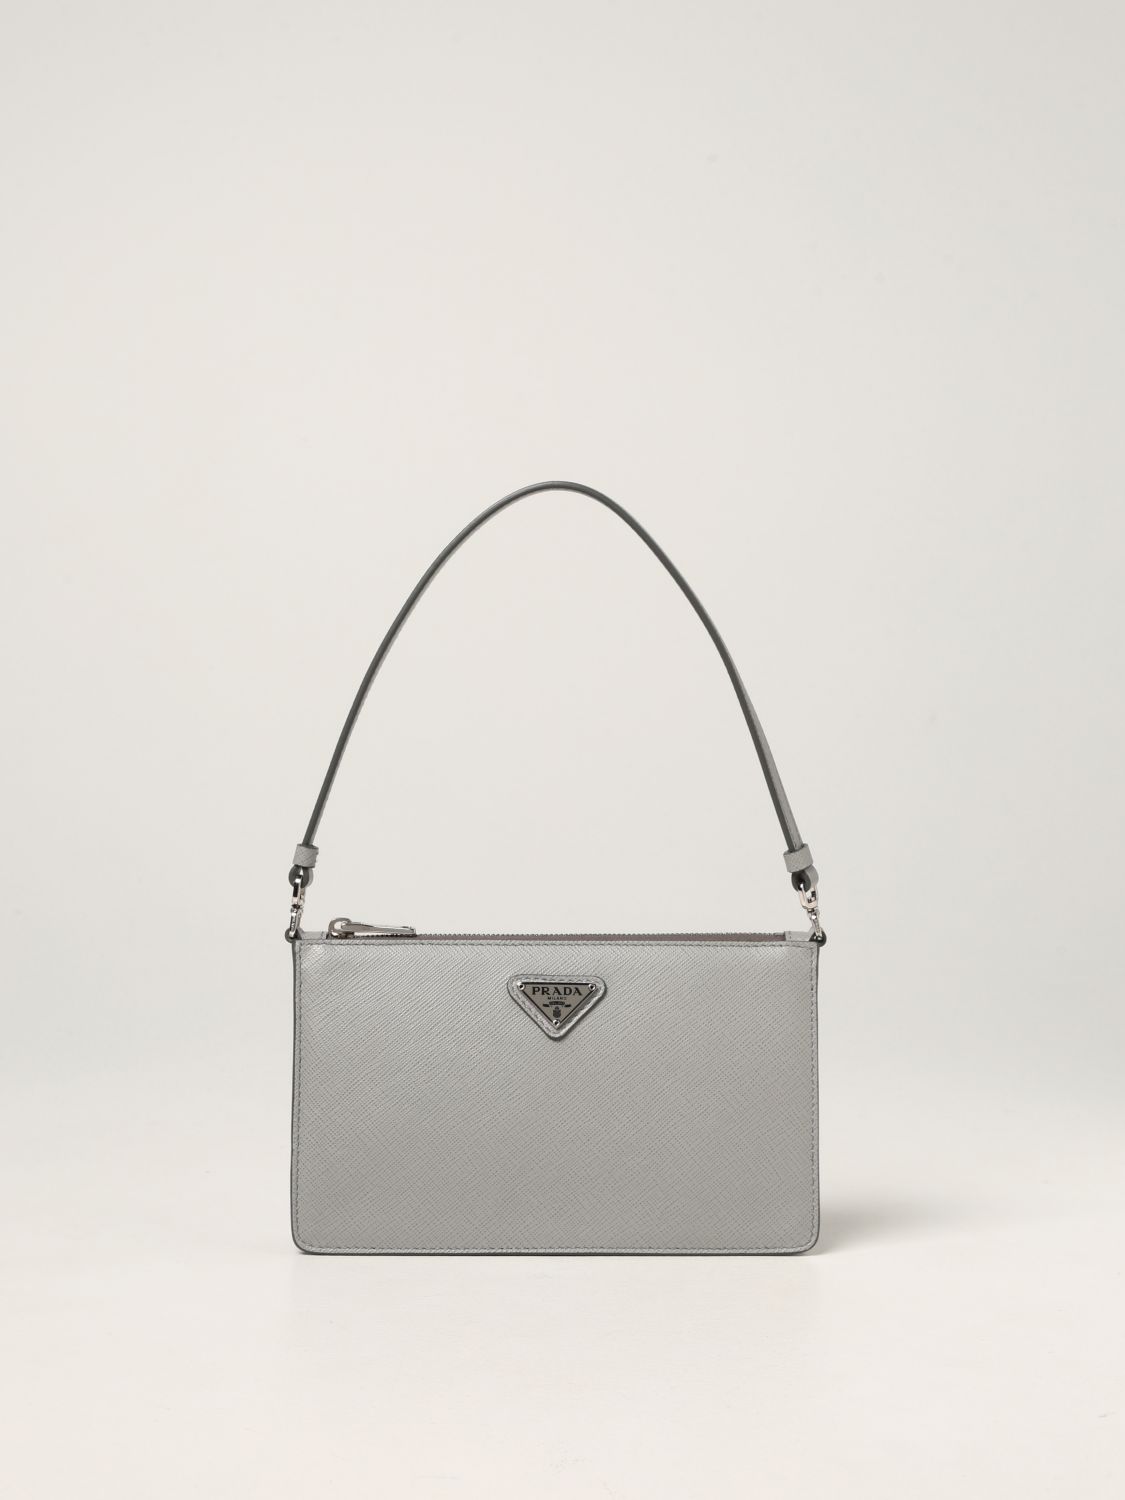 saffiano Prada Handbags for Women - Vestiaire Collective